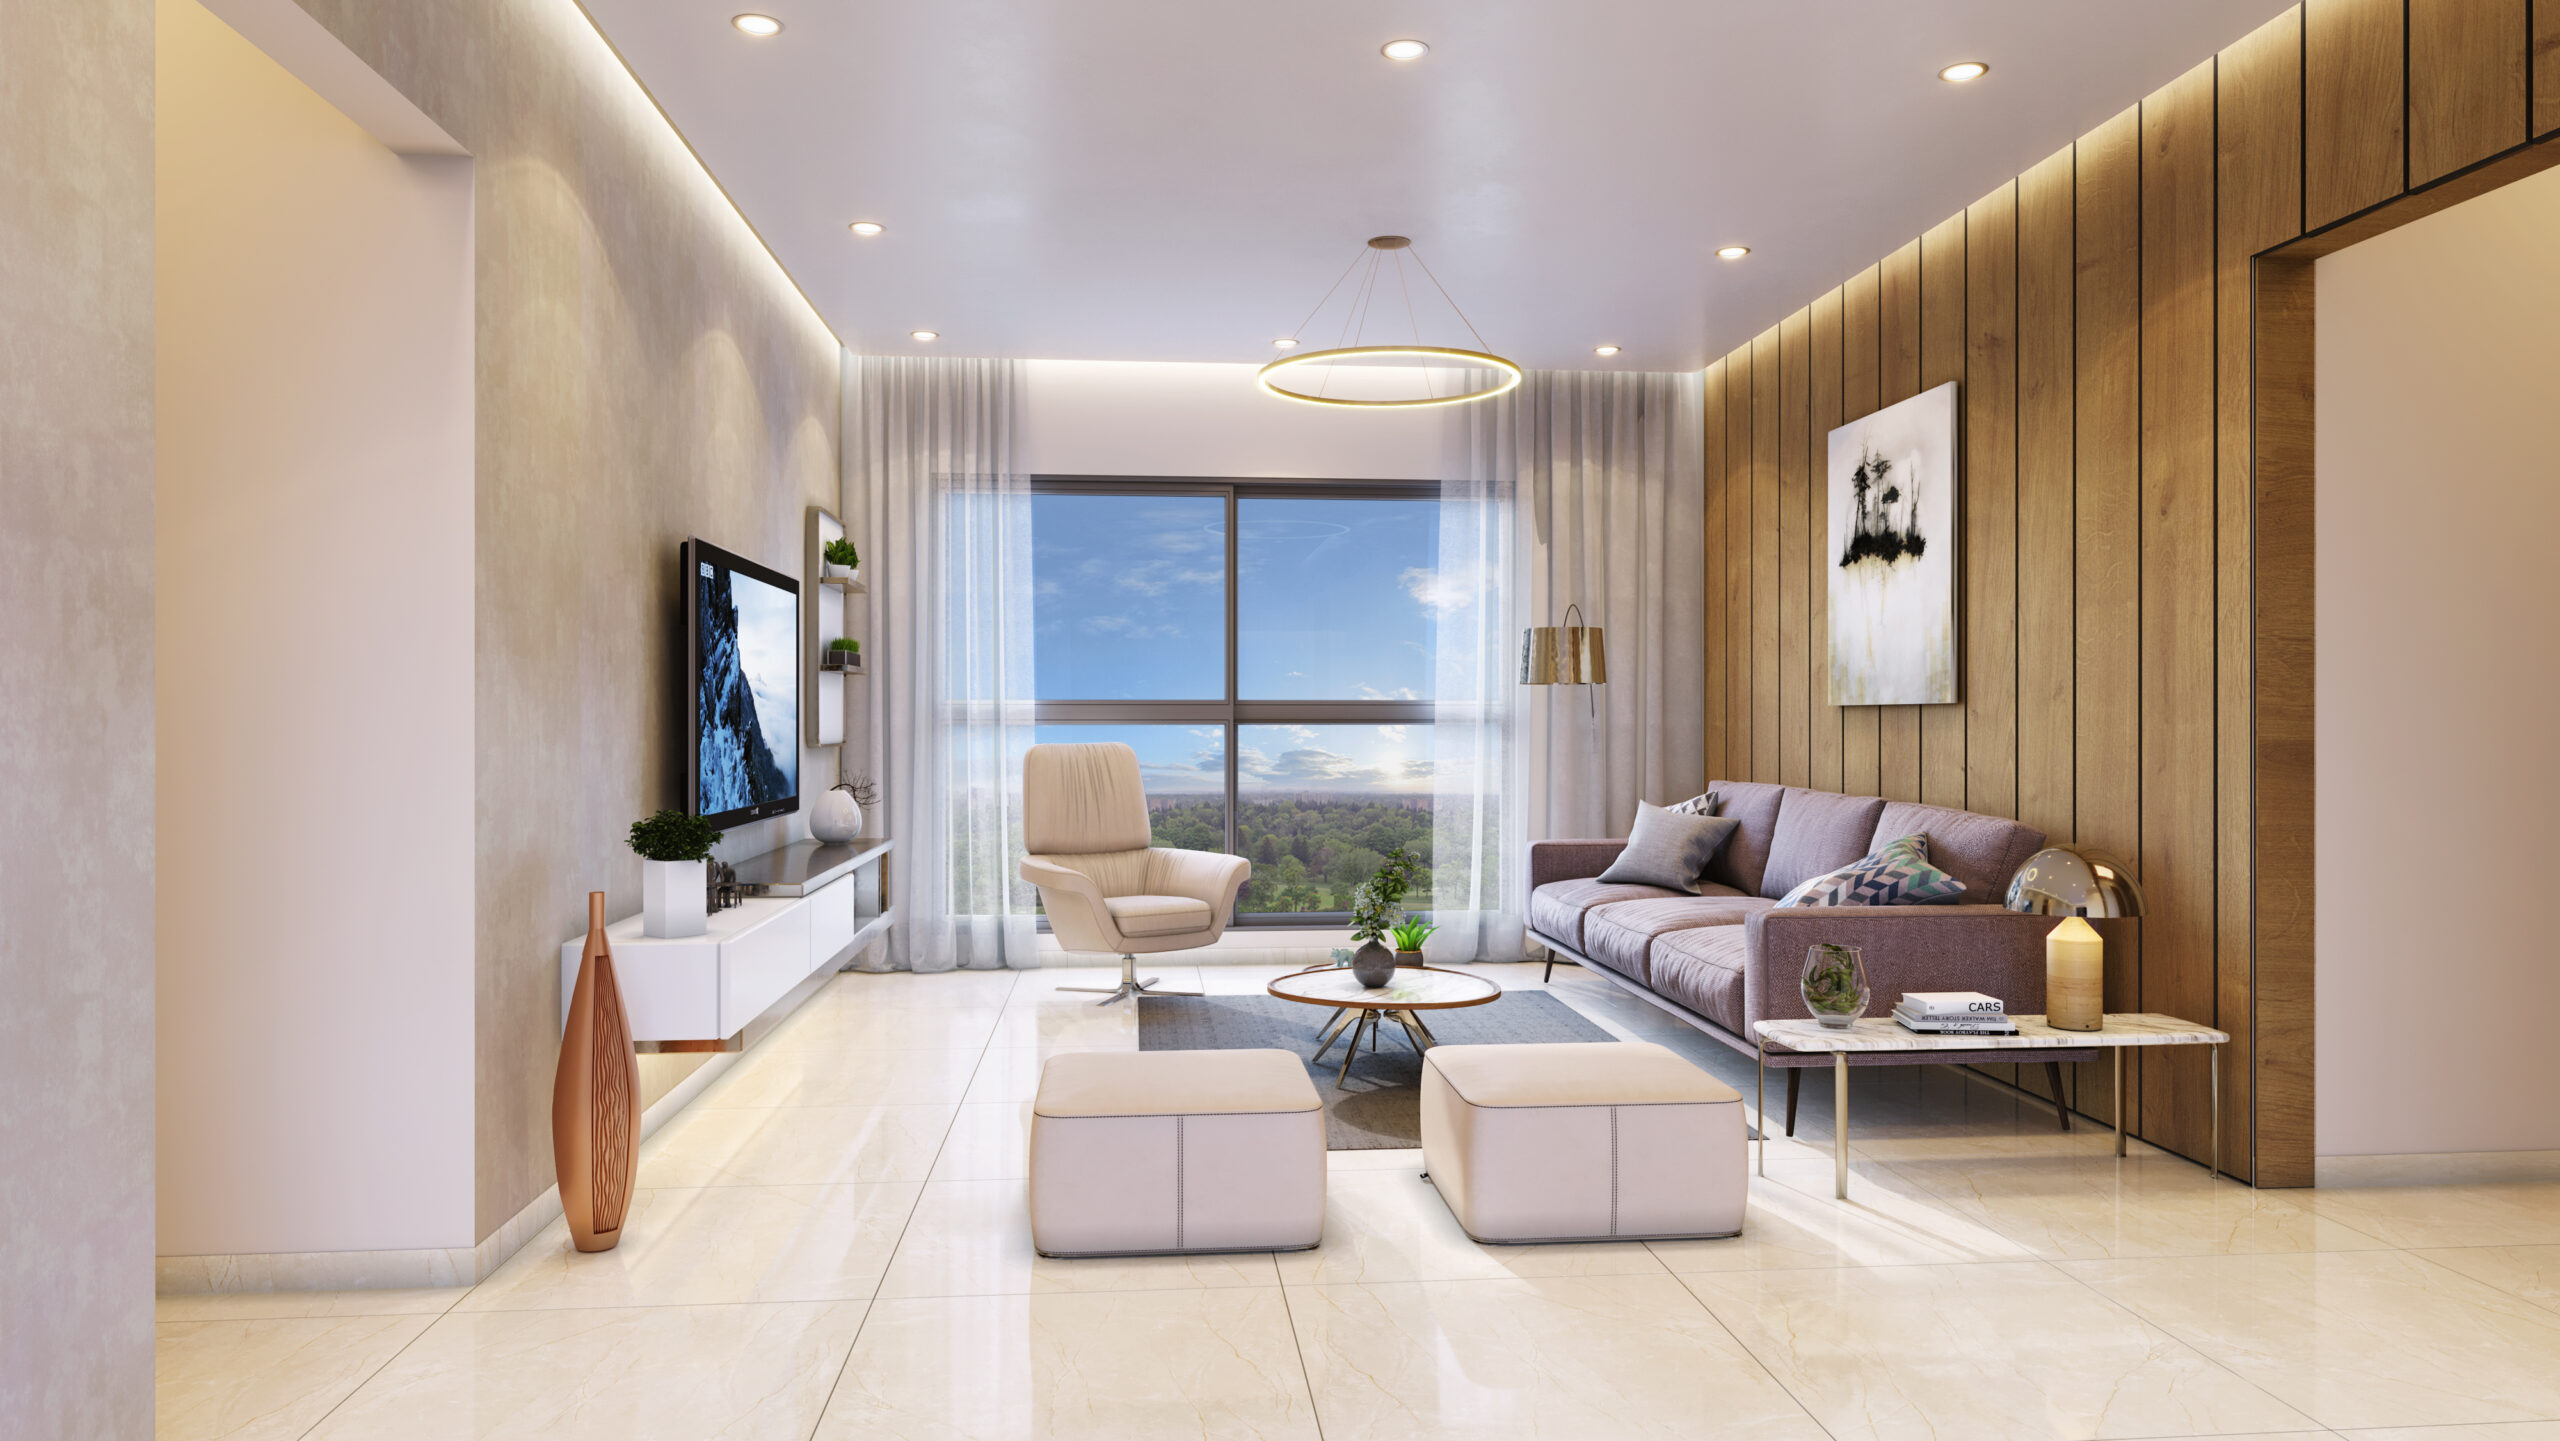 Artistic Impression of Living Room